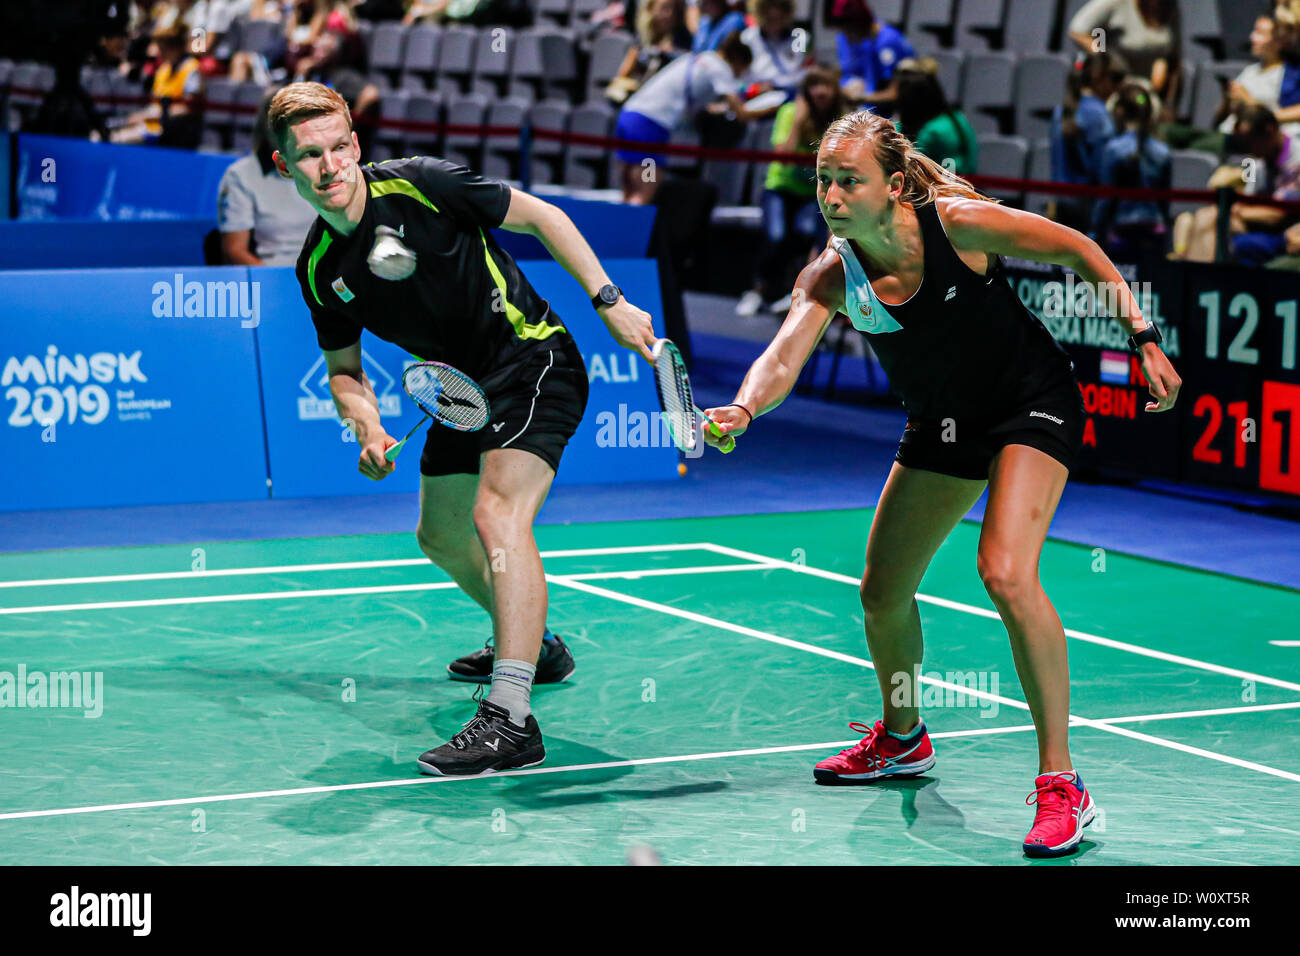 27 june 2019 Minsk, Belarus European games 2019 Badminton: Selena Piek and  Robin Tabeling of Netherlands Stock Photo - Alamy